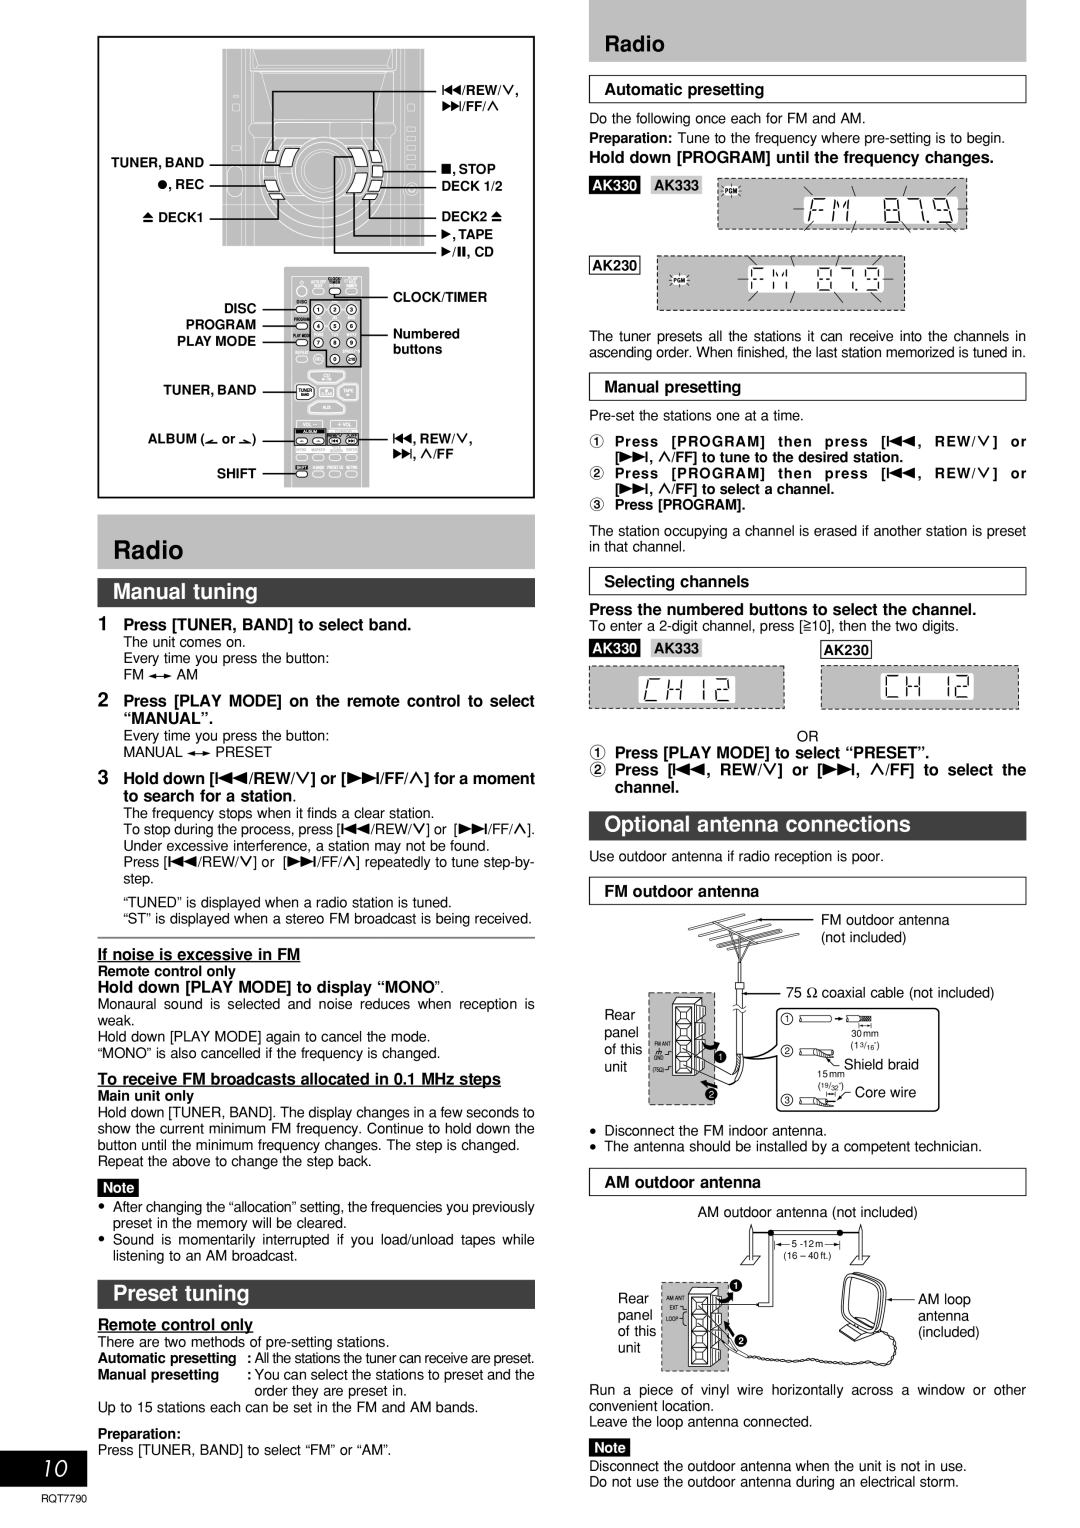 Panasonic SC-AK230, SC-AK333 operating instructions Radio, Manual tuning, Preset tuning, Optional antenna connections 